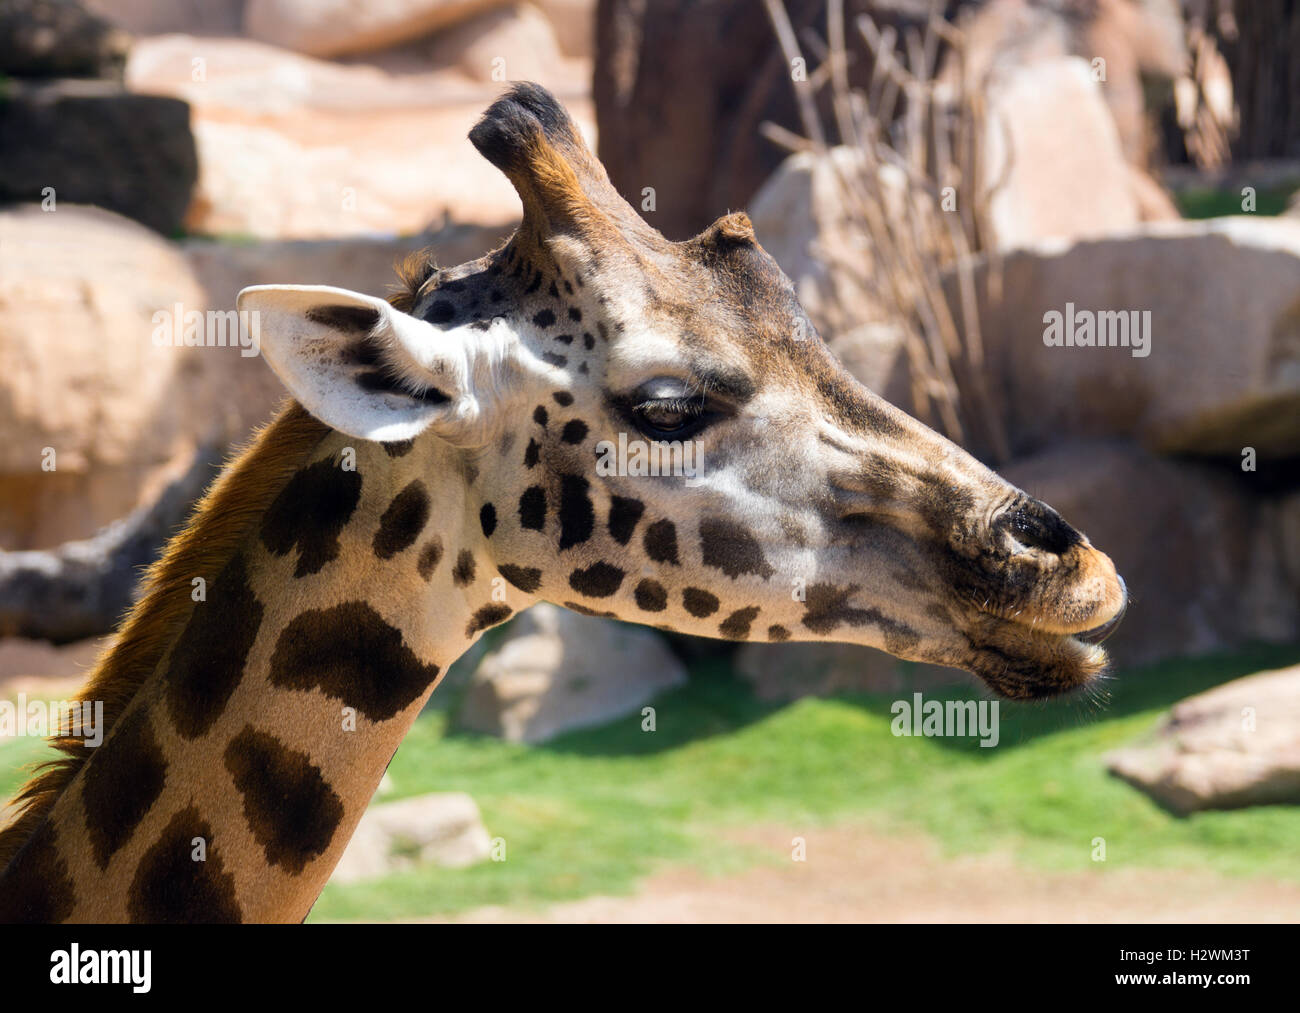 Closeup of a giraffe head Stock Photo